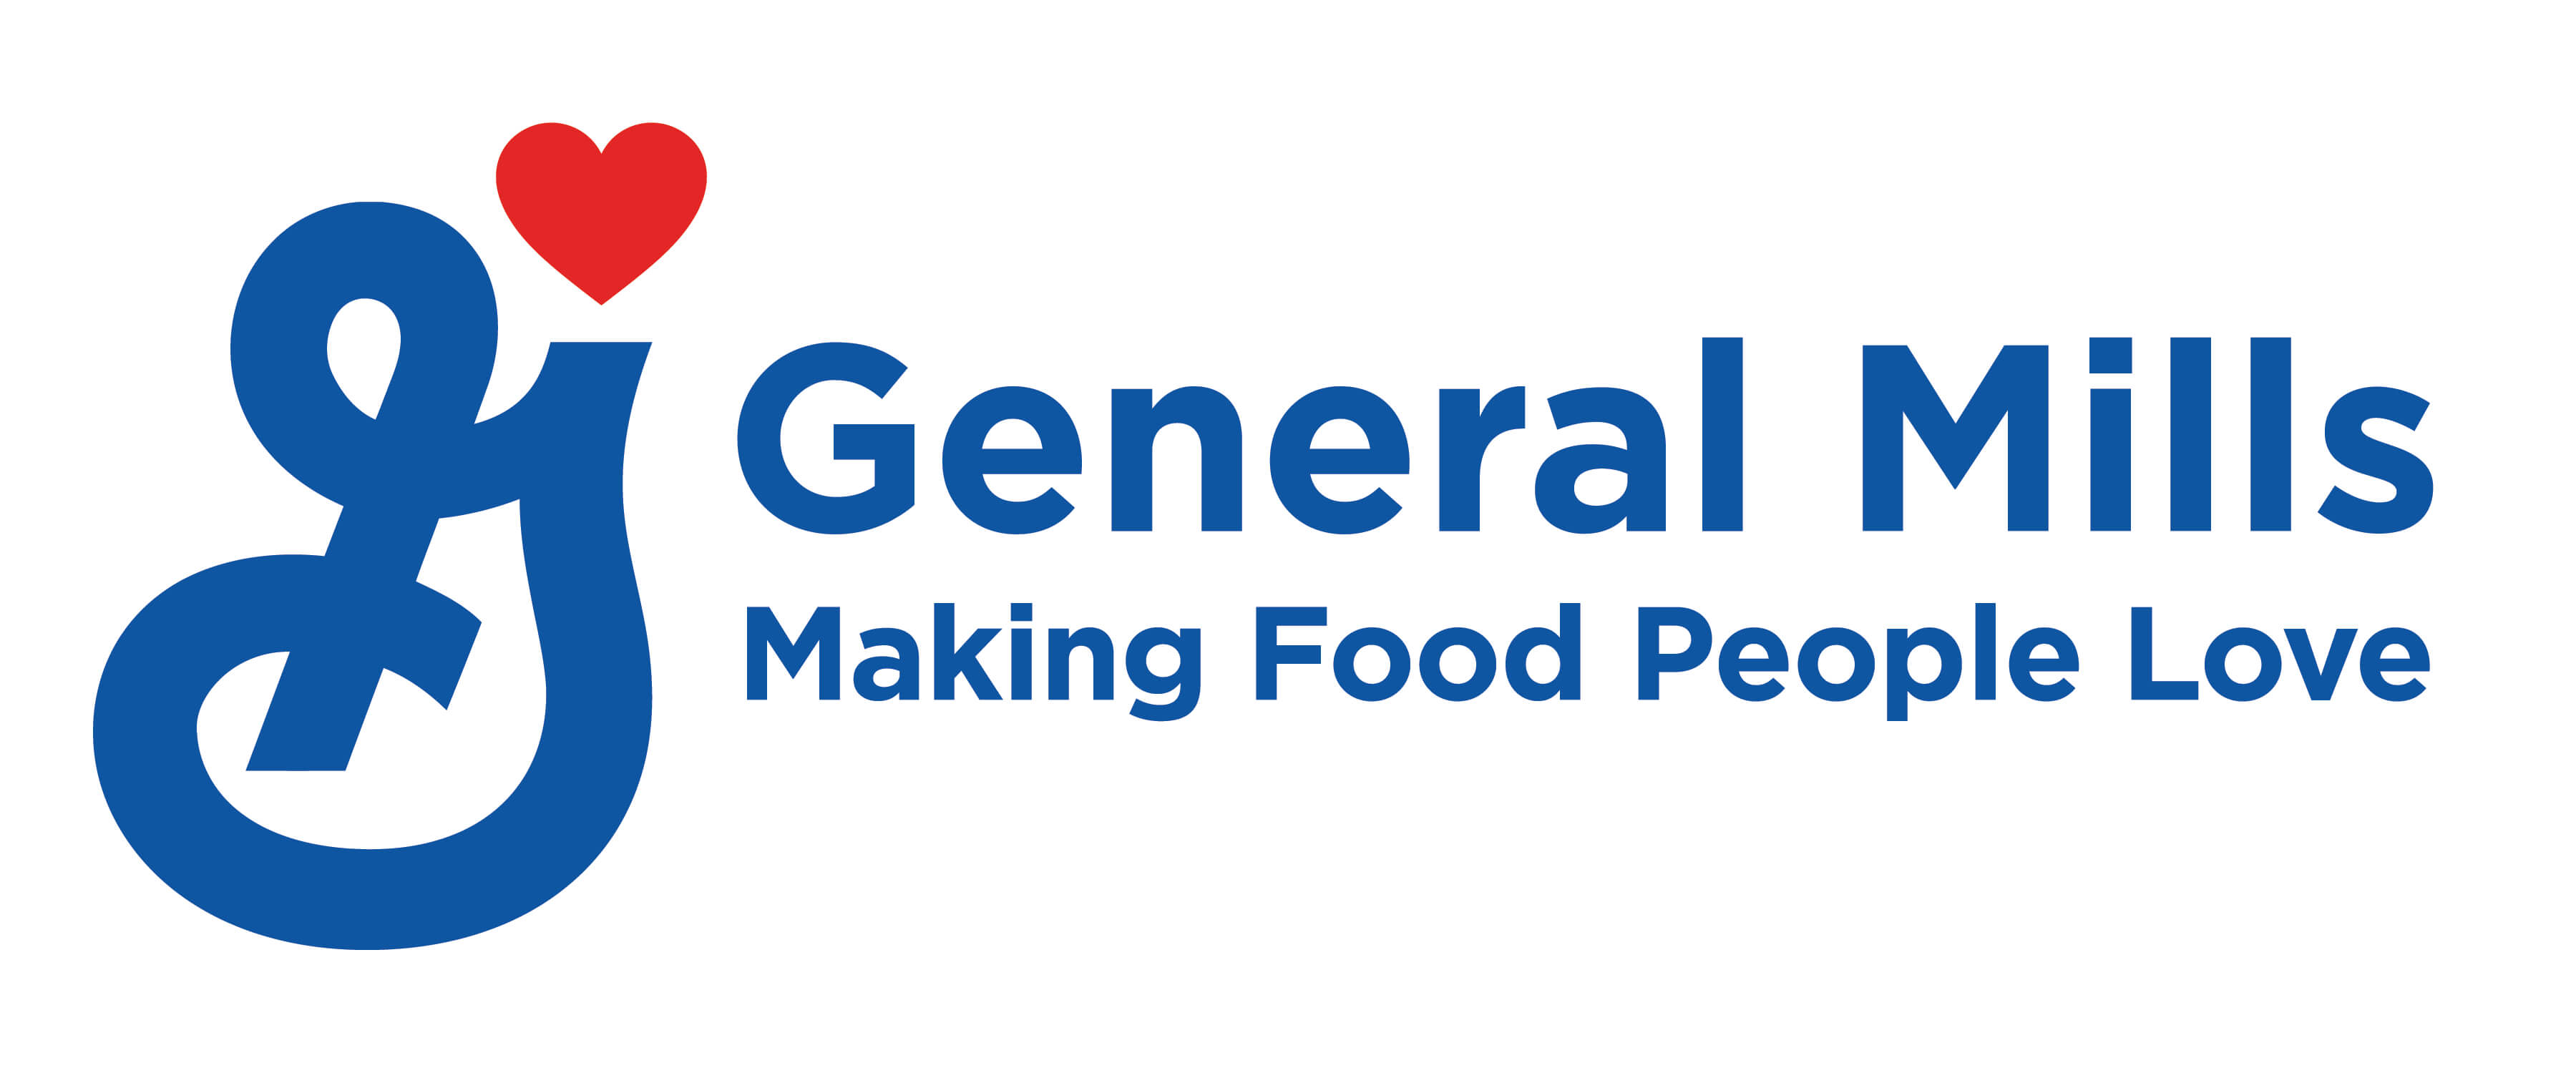 General Mills Foundation logo